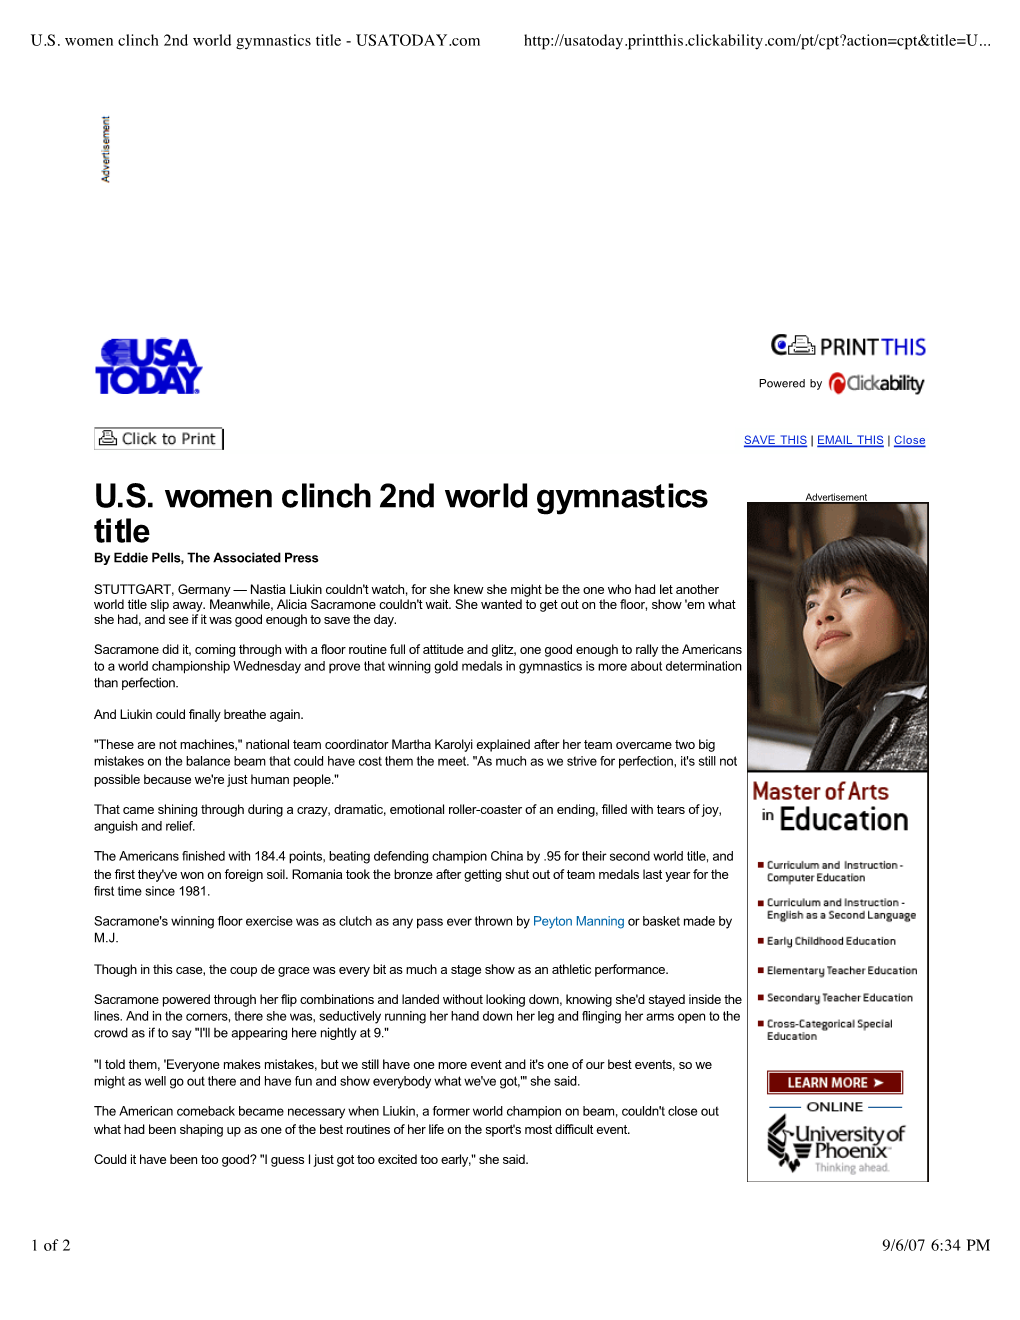 U.S. Women Clinch 2Nd World Gymnastics Title - USATODAY.Com